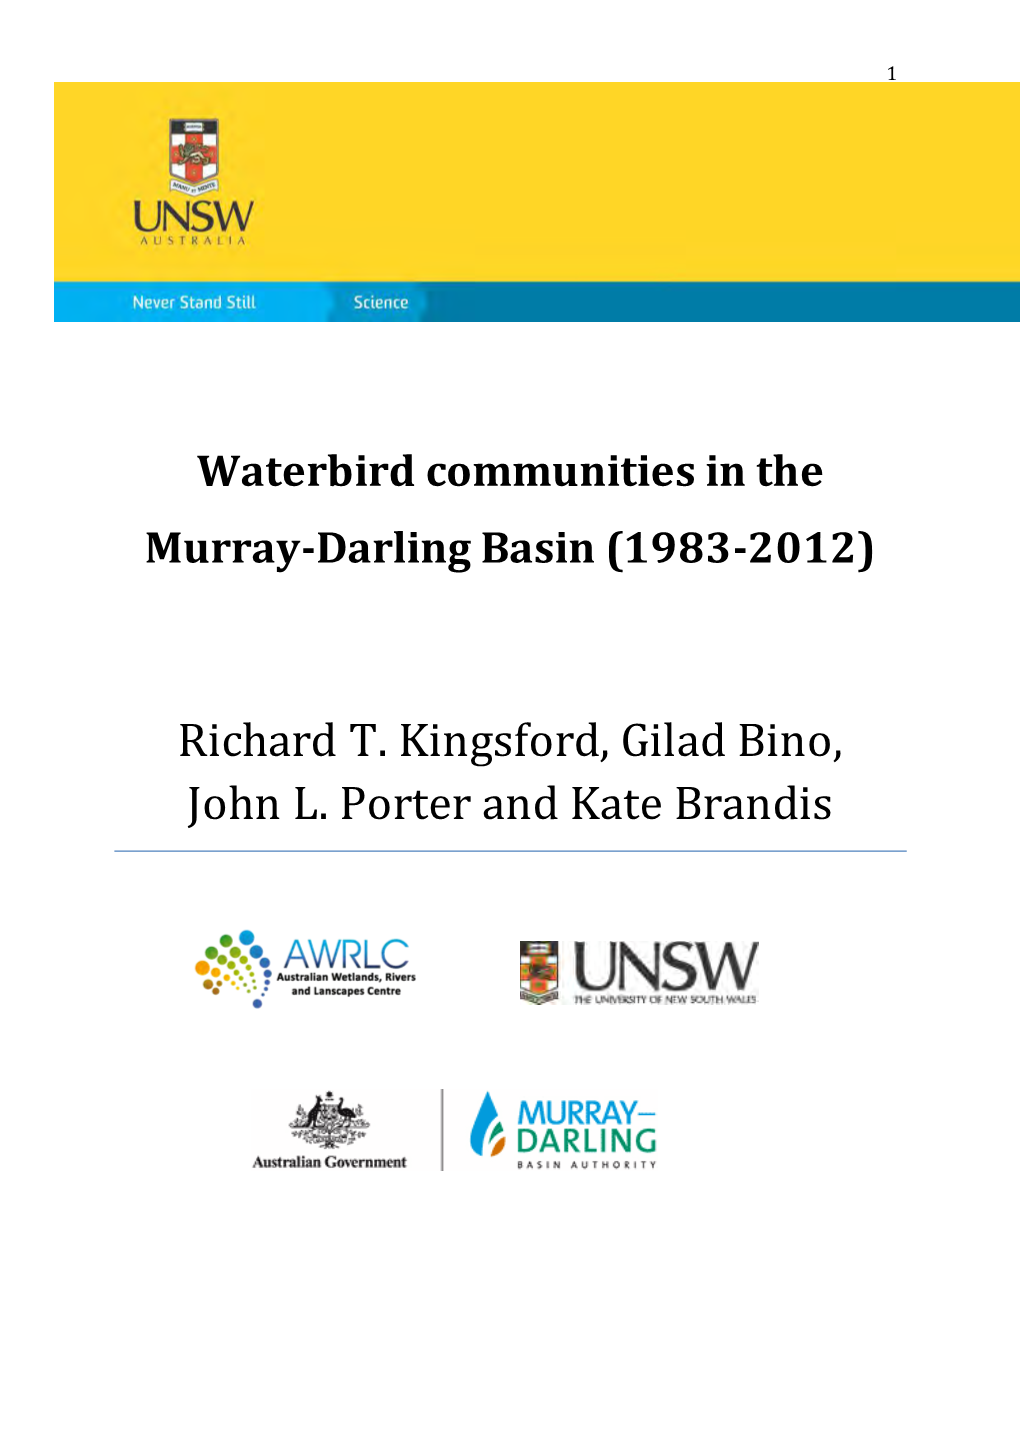 Waterbird Communities in the Murray-Darling Basin (1983-2012)